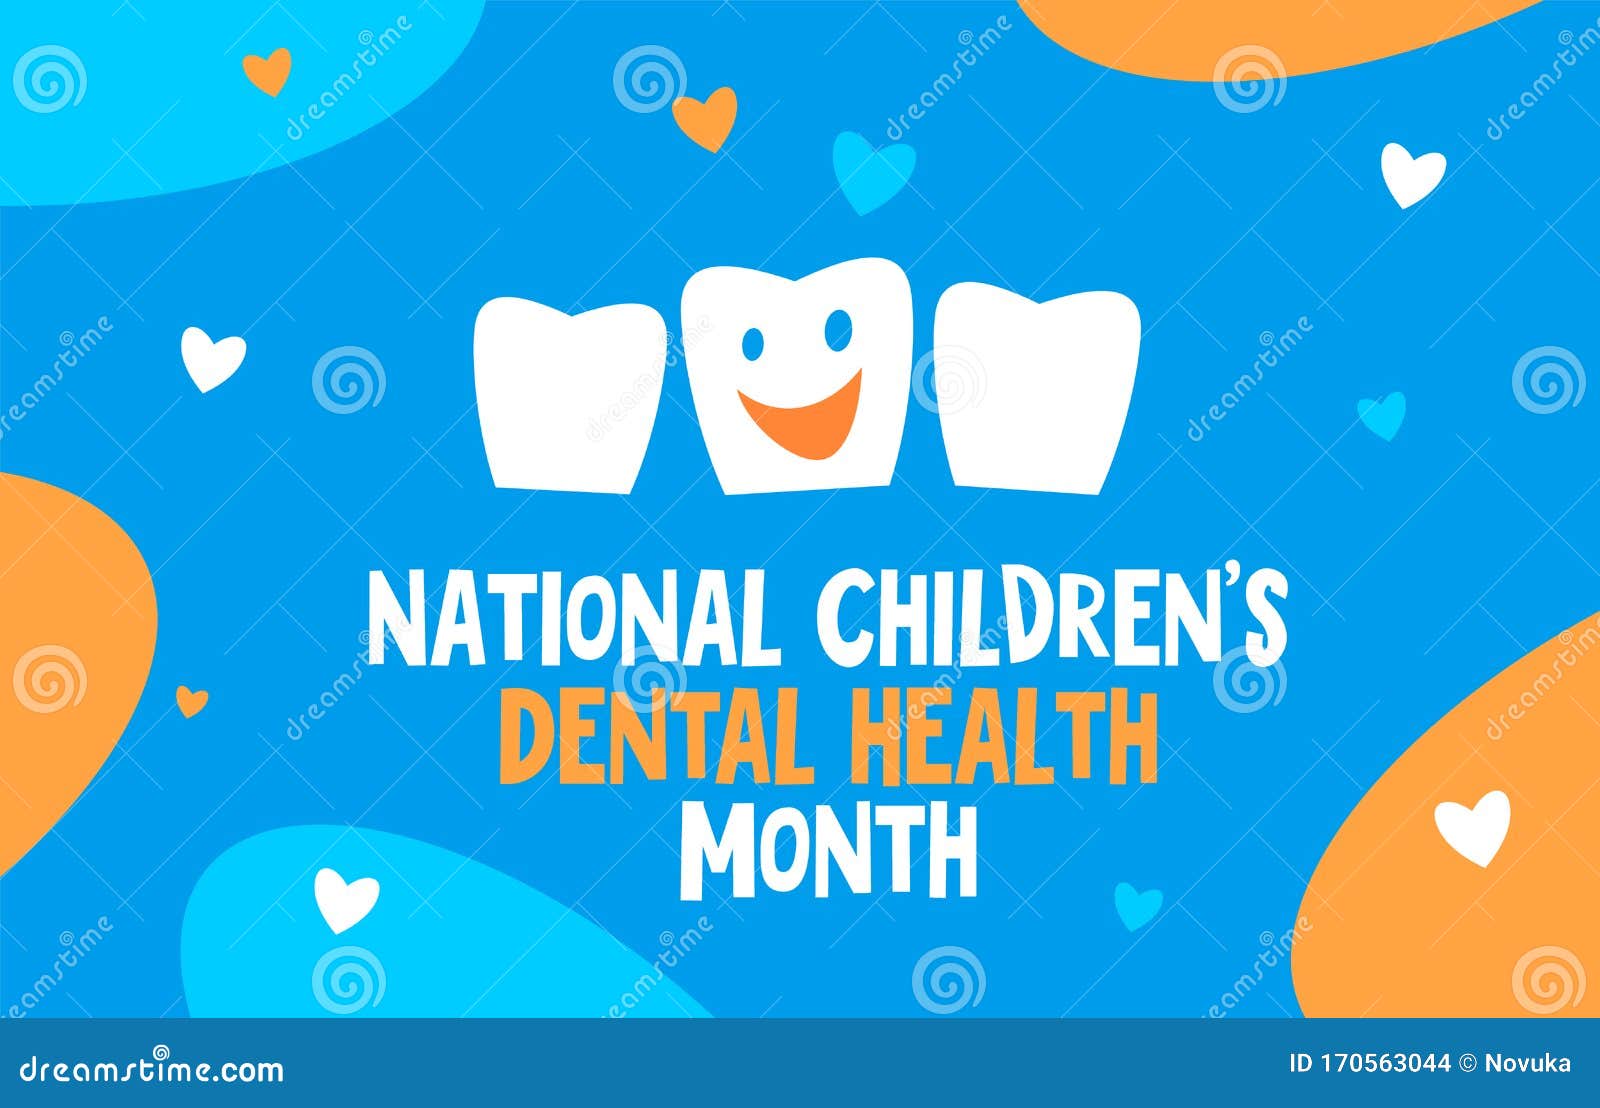 National Children’s Dental Health Month Vector Banner. Protecting